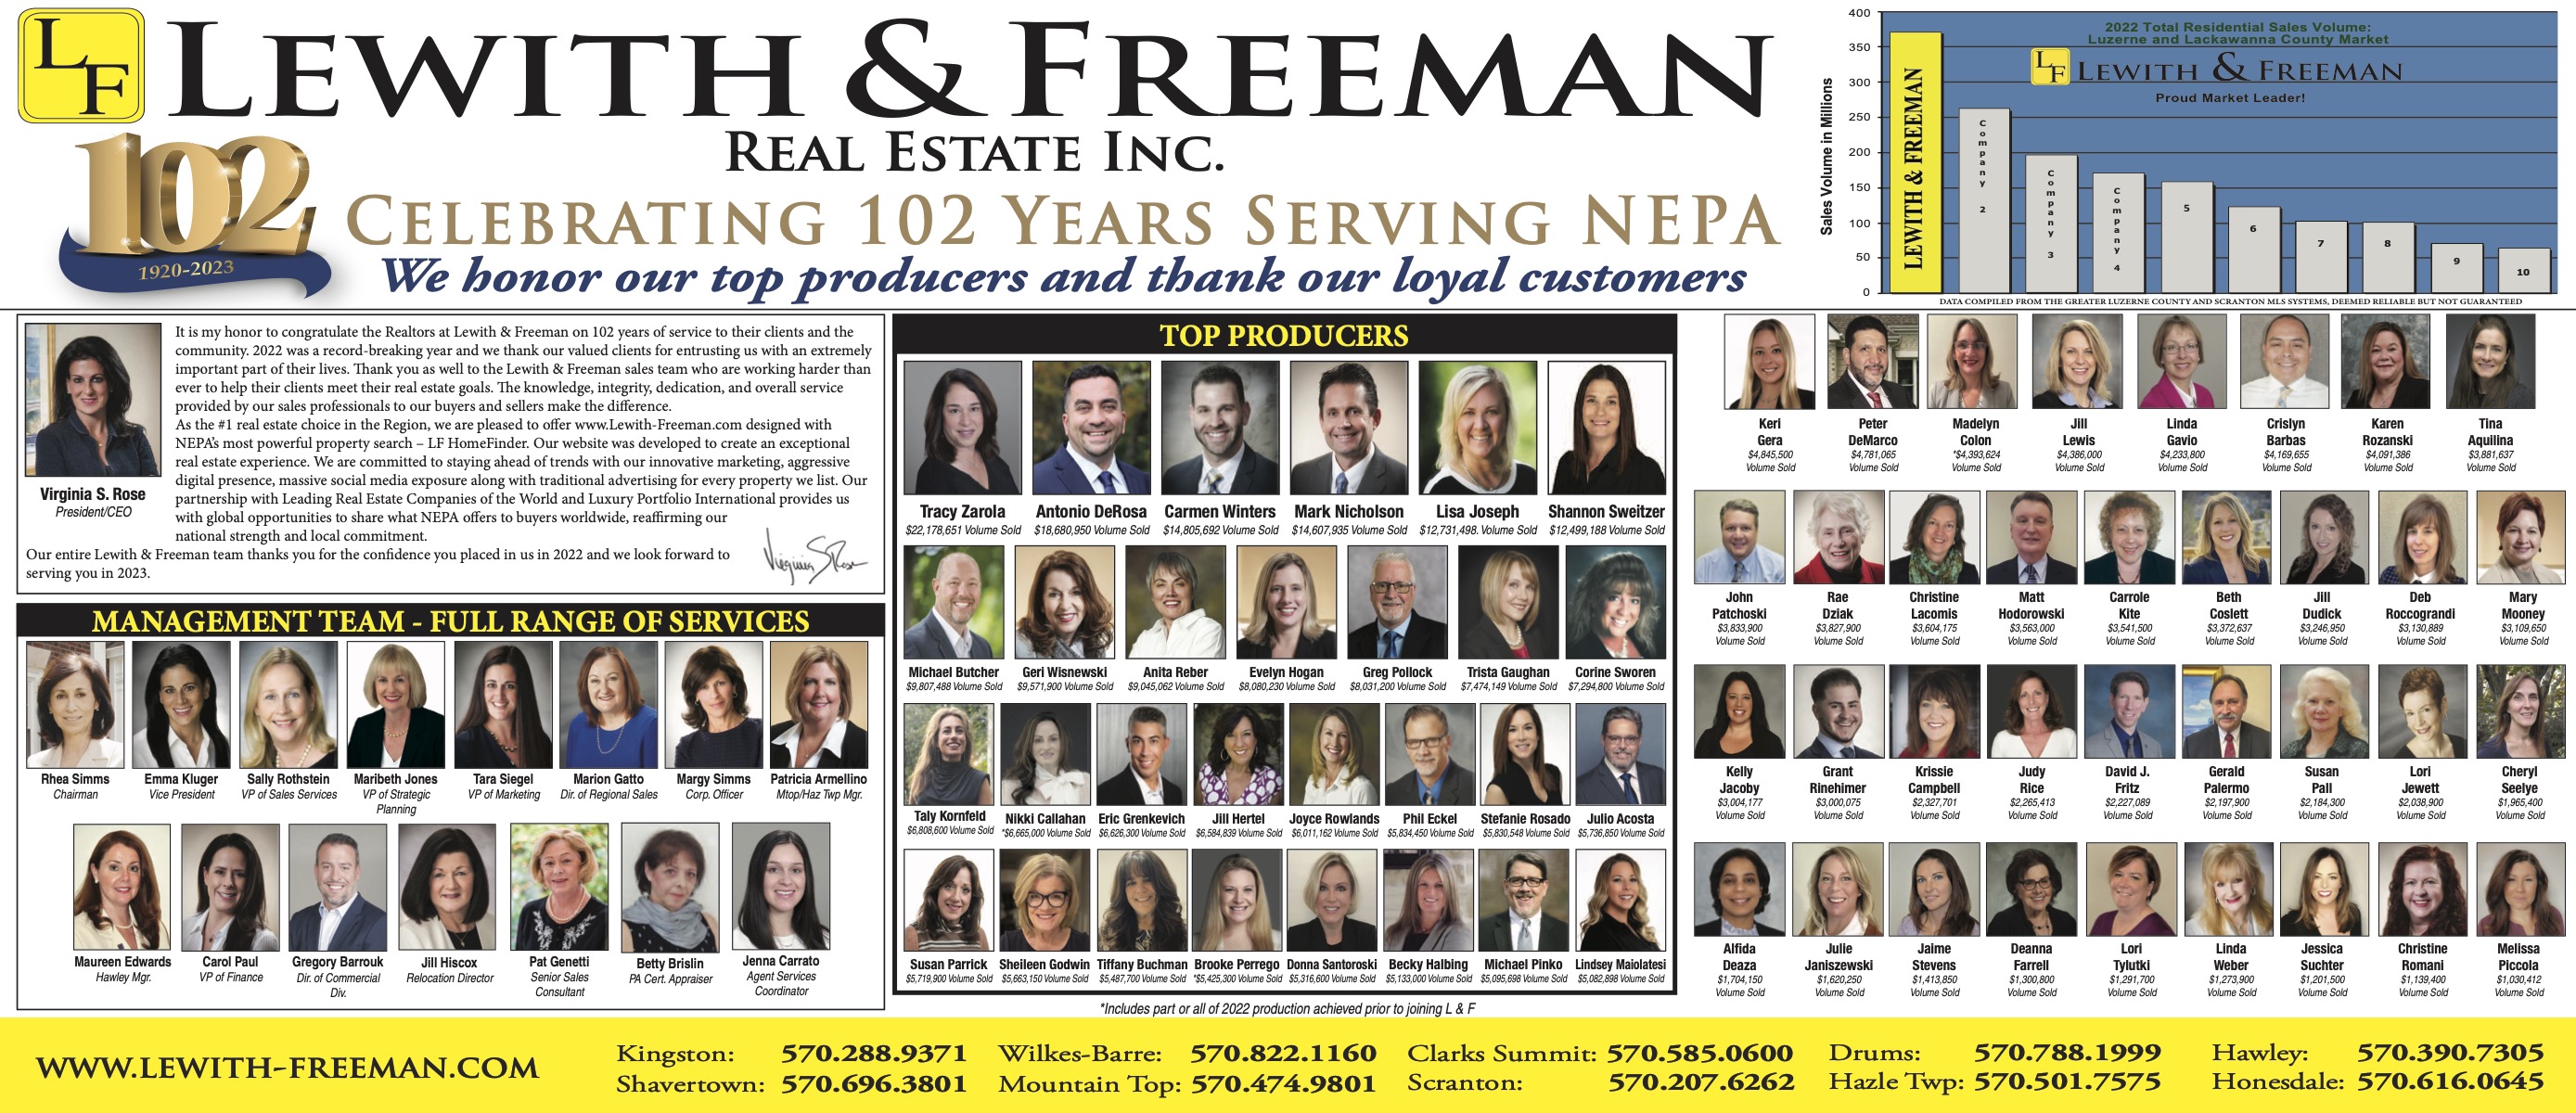 Lewith & Freeman Real Estate, Inc. Congratulates Top Producing Realtors for Award-Winning 2022